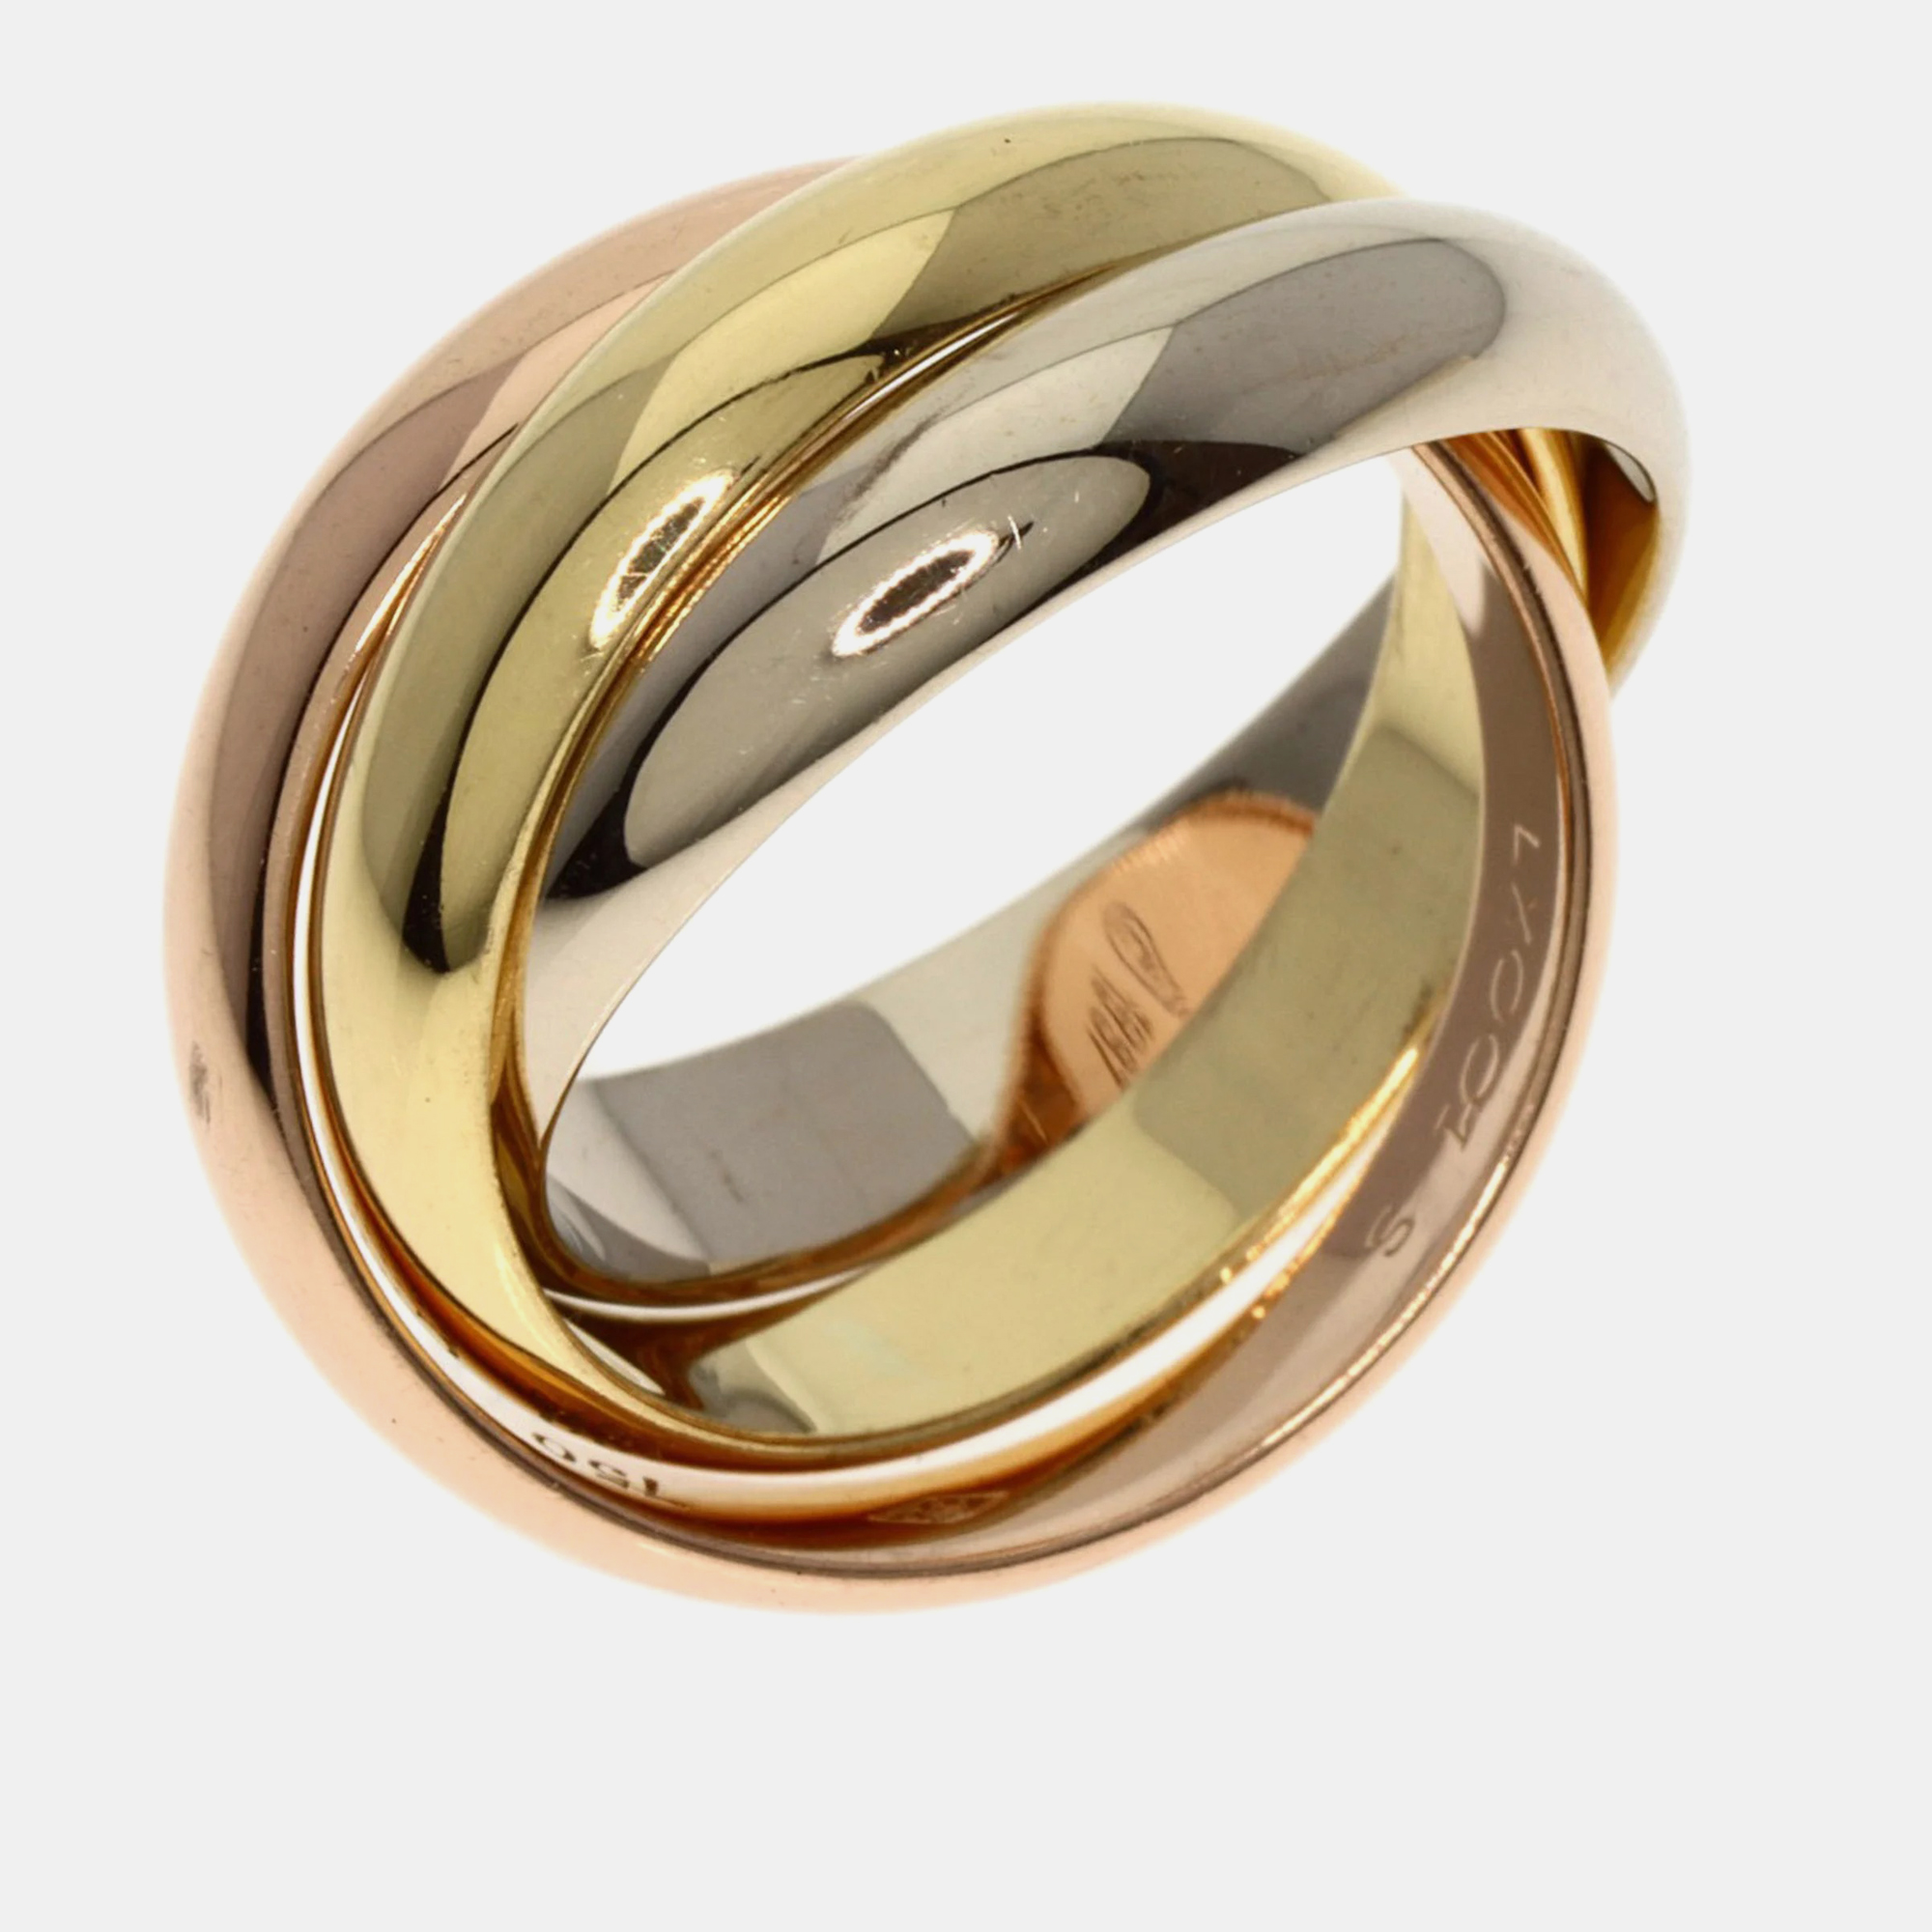 Cartier 18k yellow, rose, white gold trinity band ring eu 48